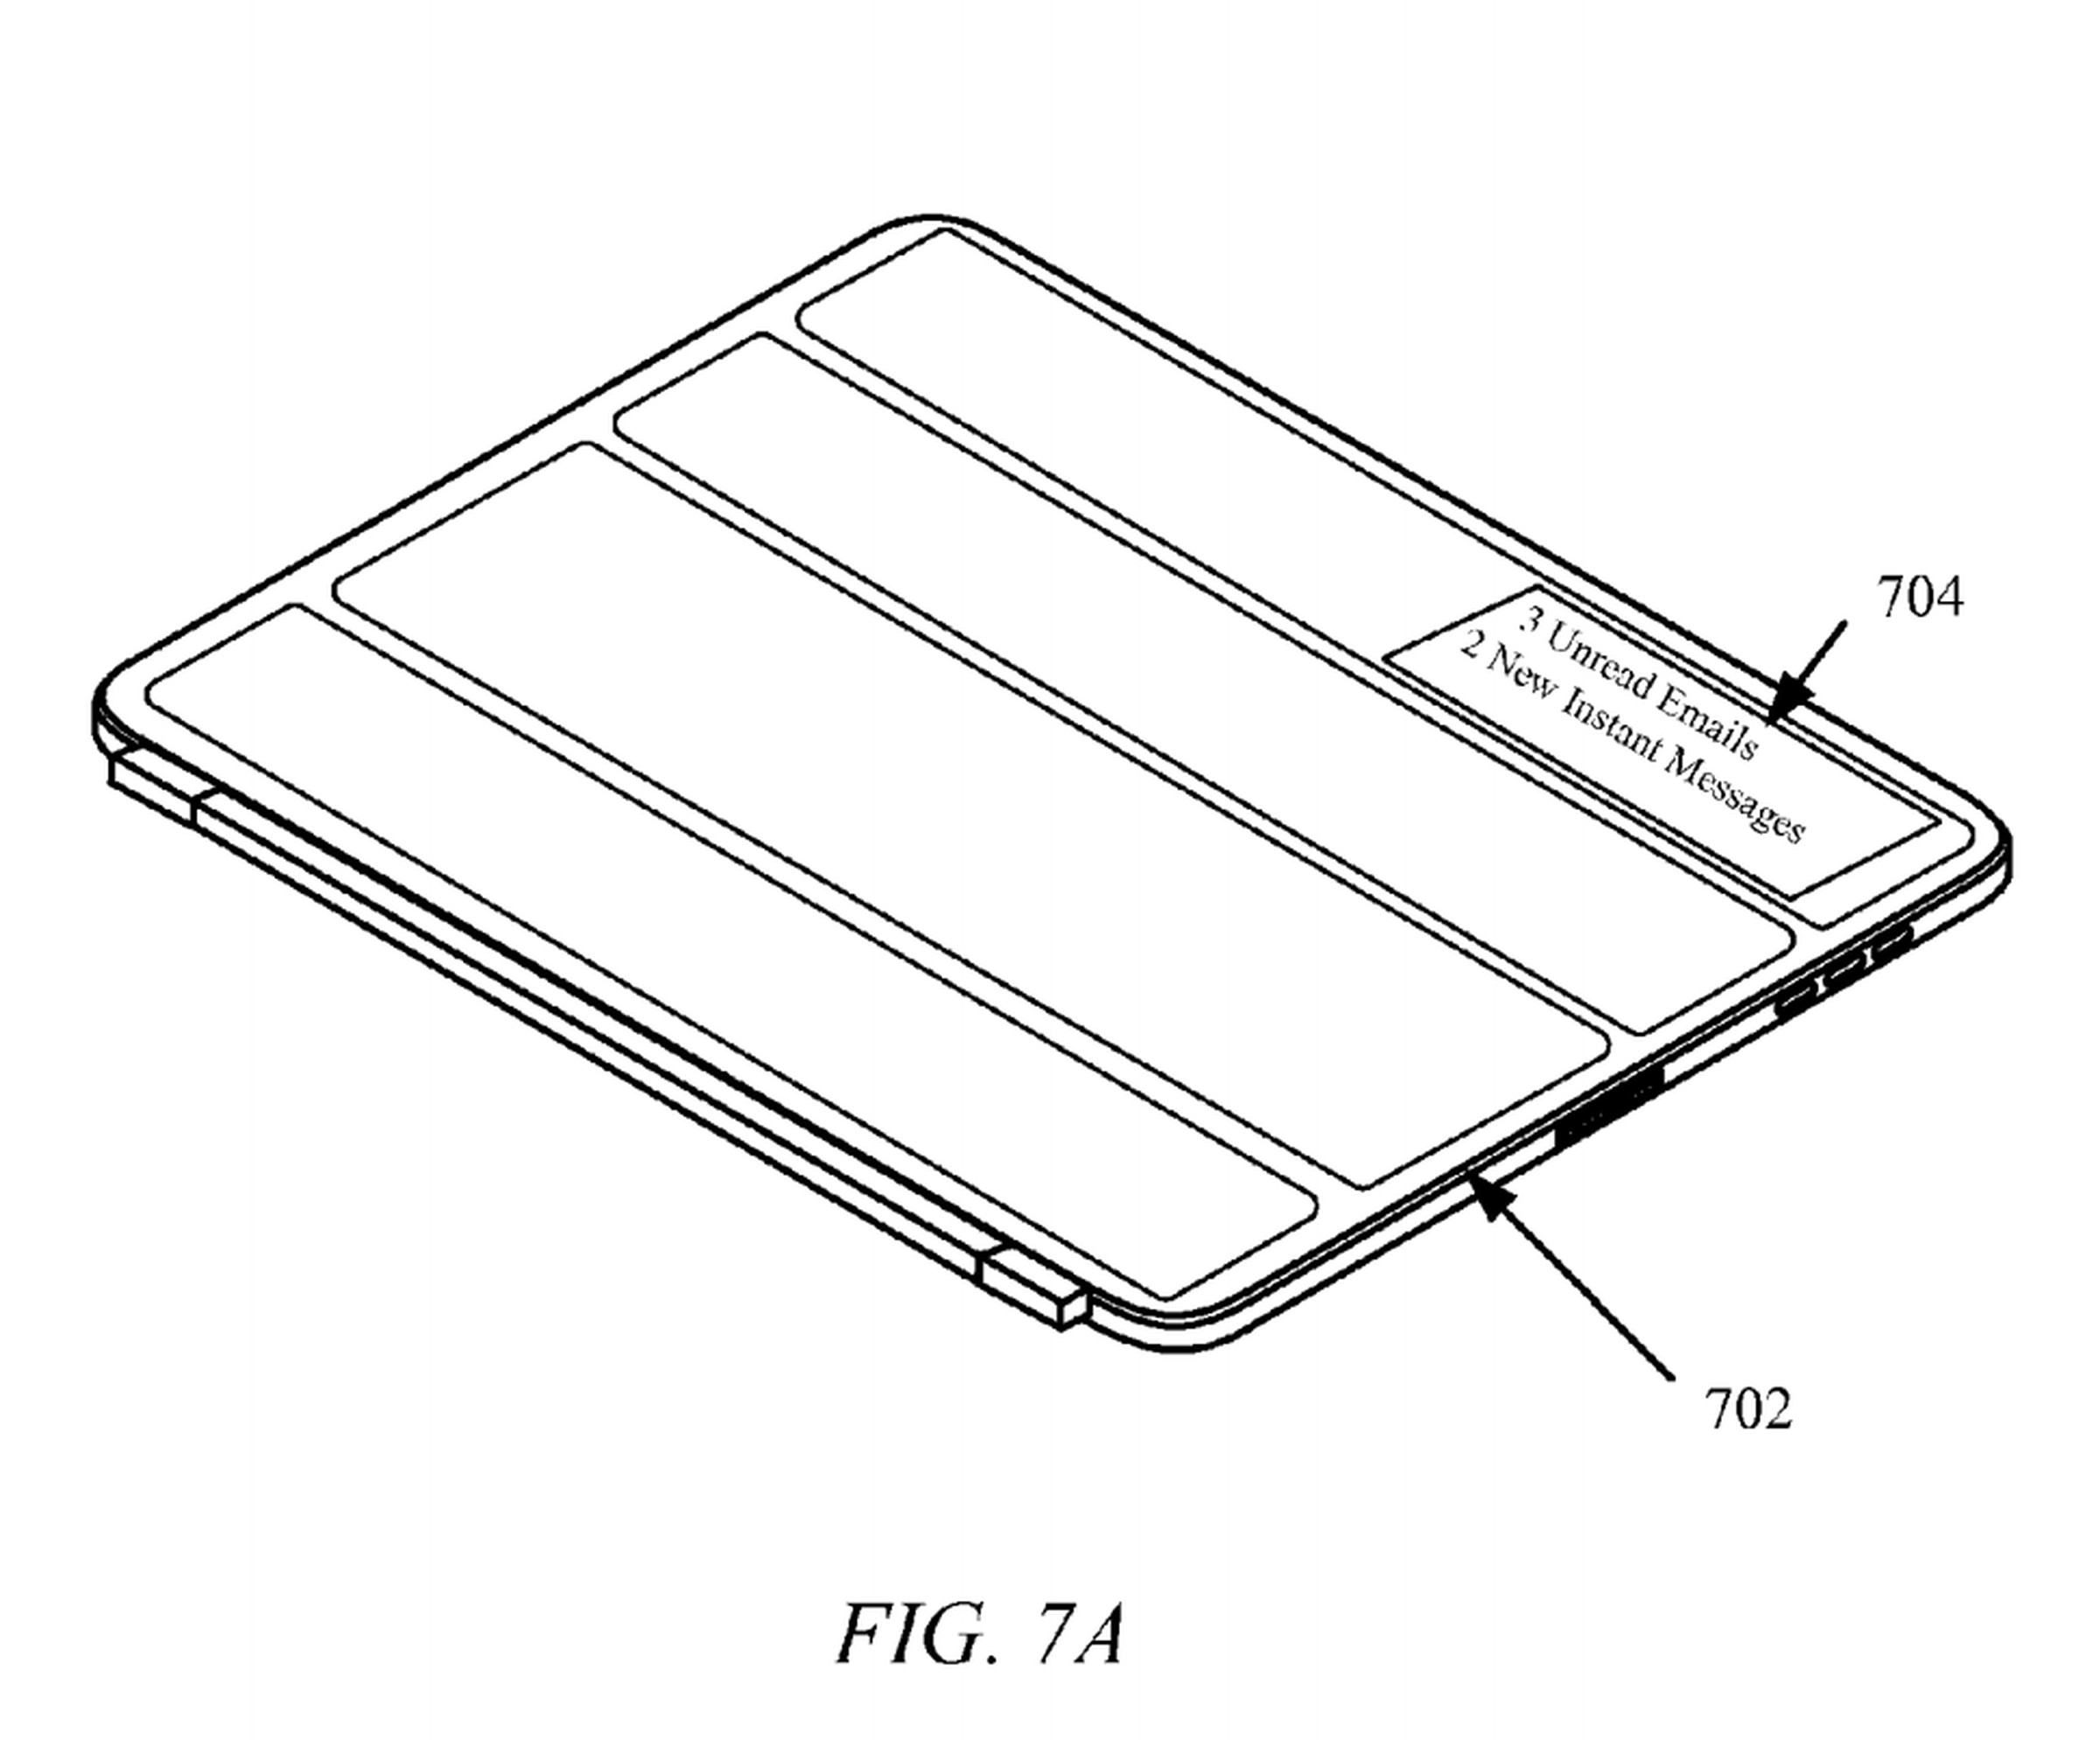 Apple iPad cover patent